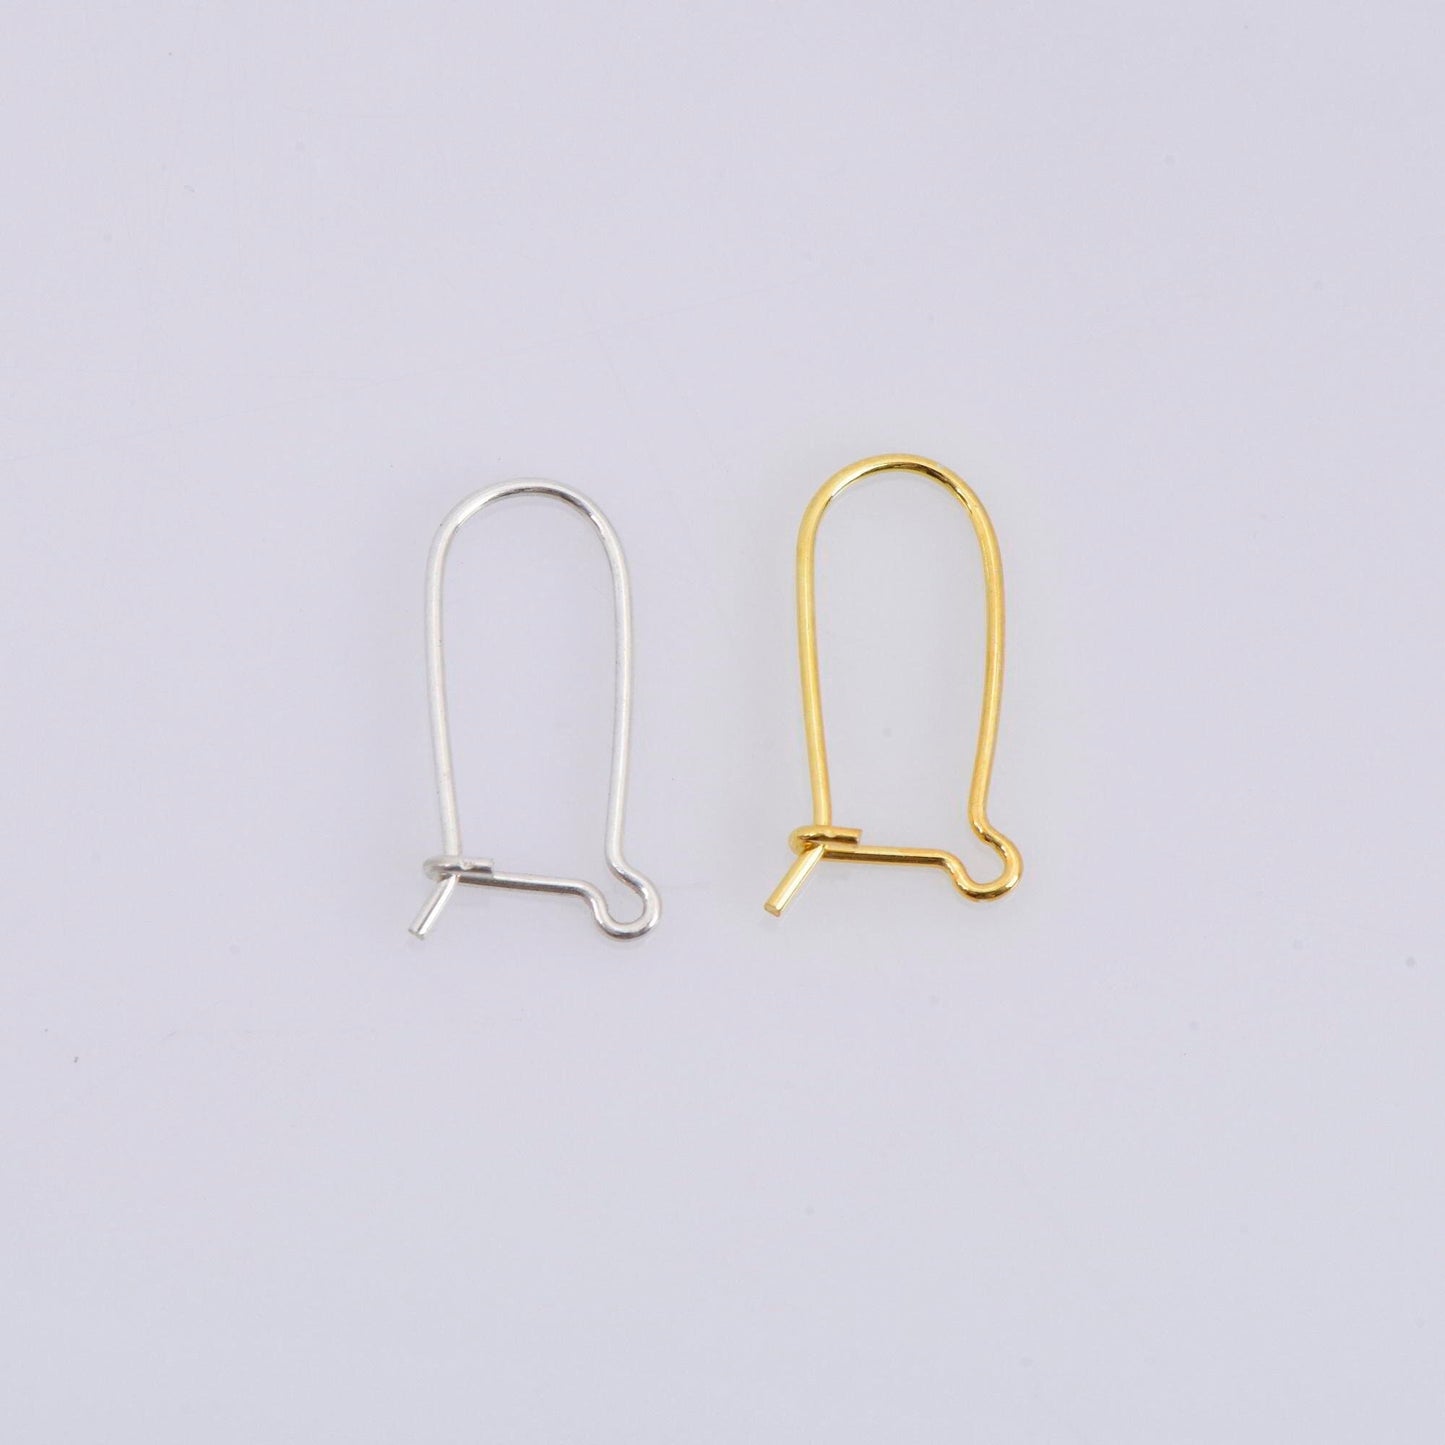 24K Gold Vermeil Kidney Ear Wires, Solid Silver Kidney Earring Hooks in 24K Gold, Earring Making Supply, Jewelry Making Findings, M47/VM47